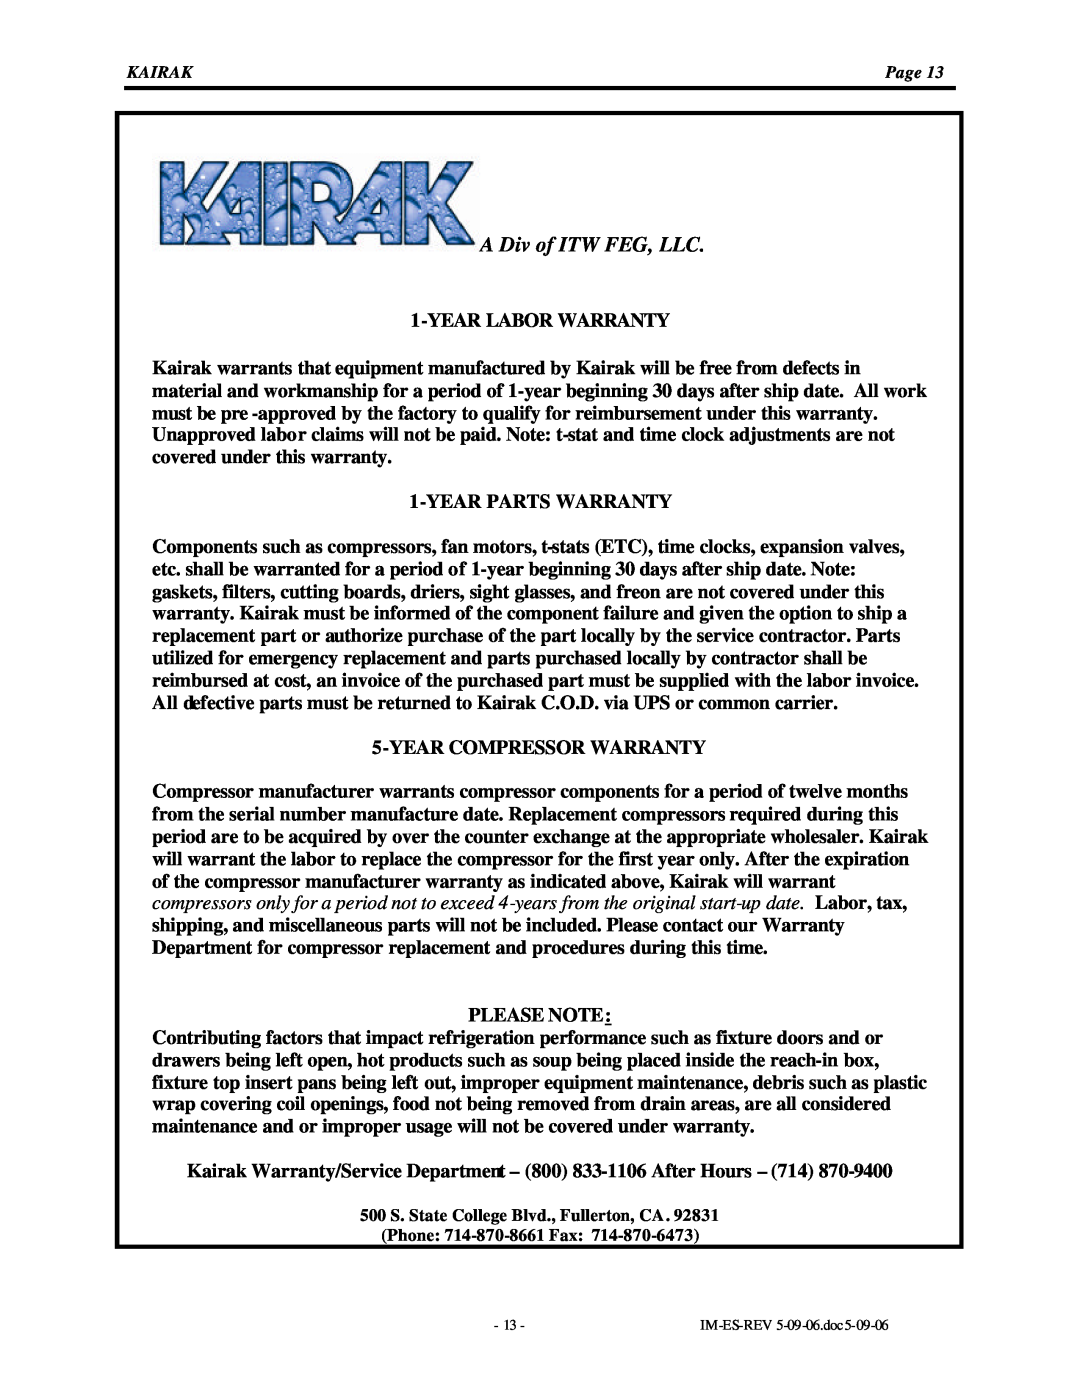 Kairak KRES instruction manual A Div of ITW FEG, LLC, Year Labor Warranty 